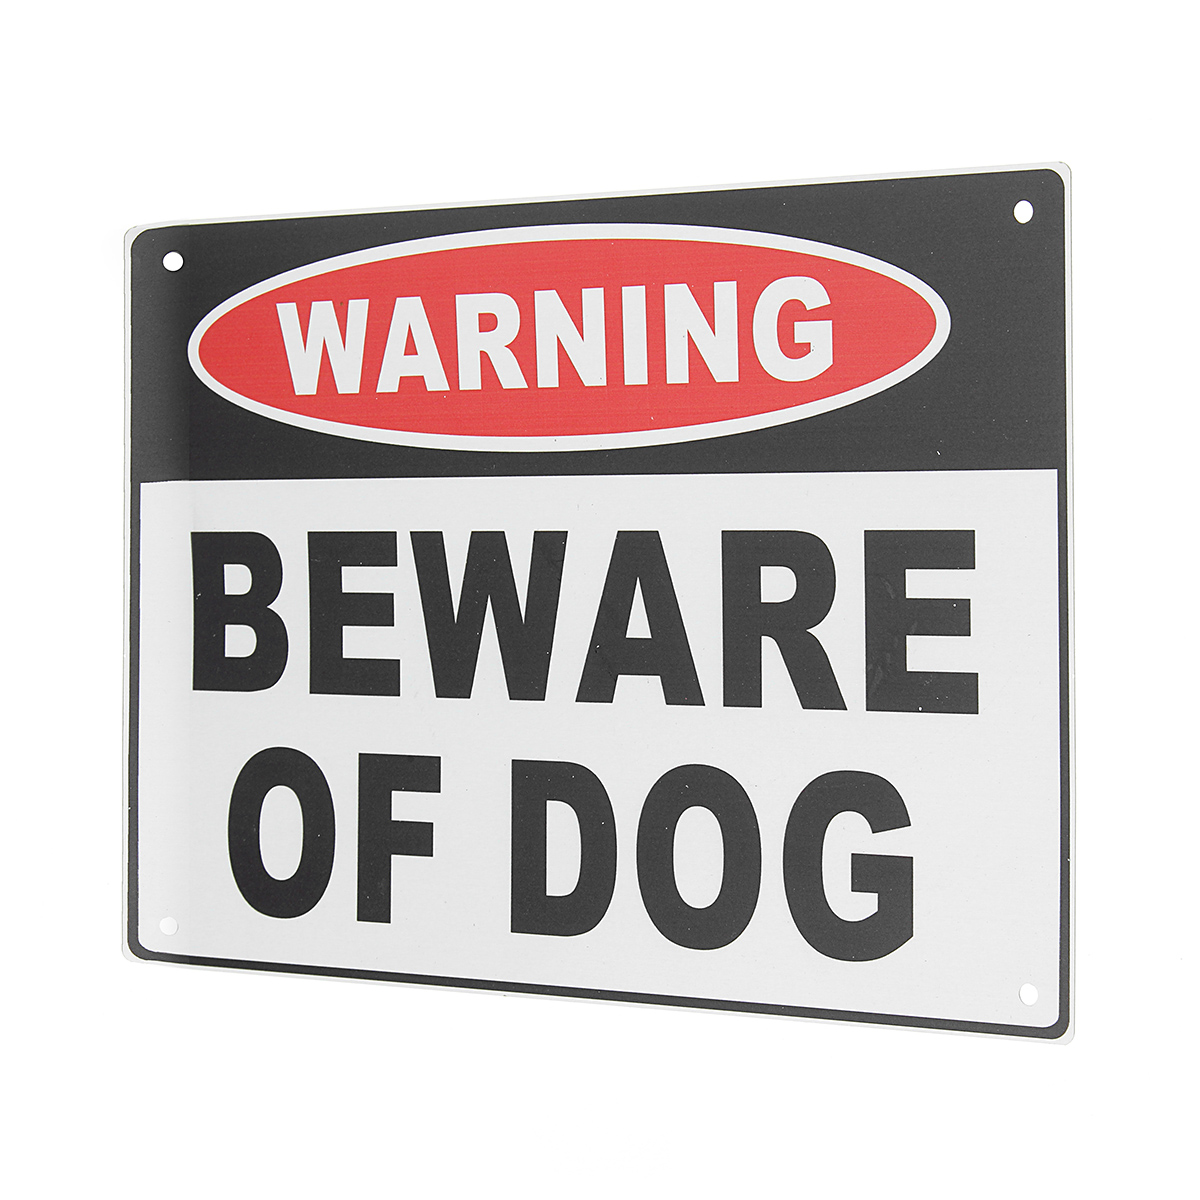 200x300mm-Warning-Beware-of-Dog-Aluminium-Safety-Warning-Sign-House-Door-Wall-Sticker-1329974-4